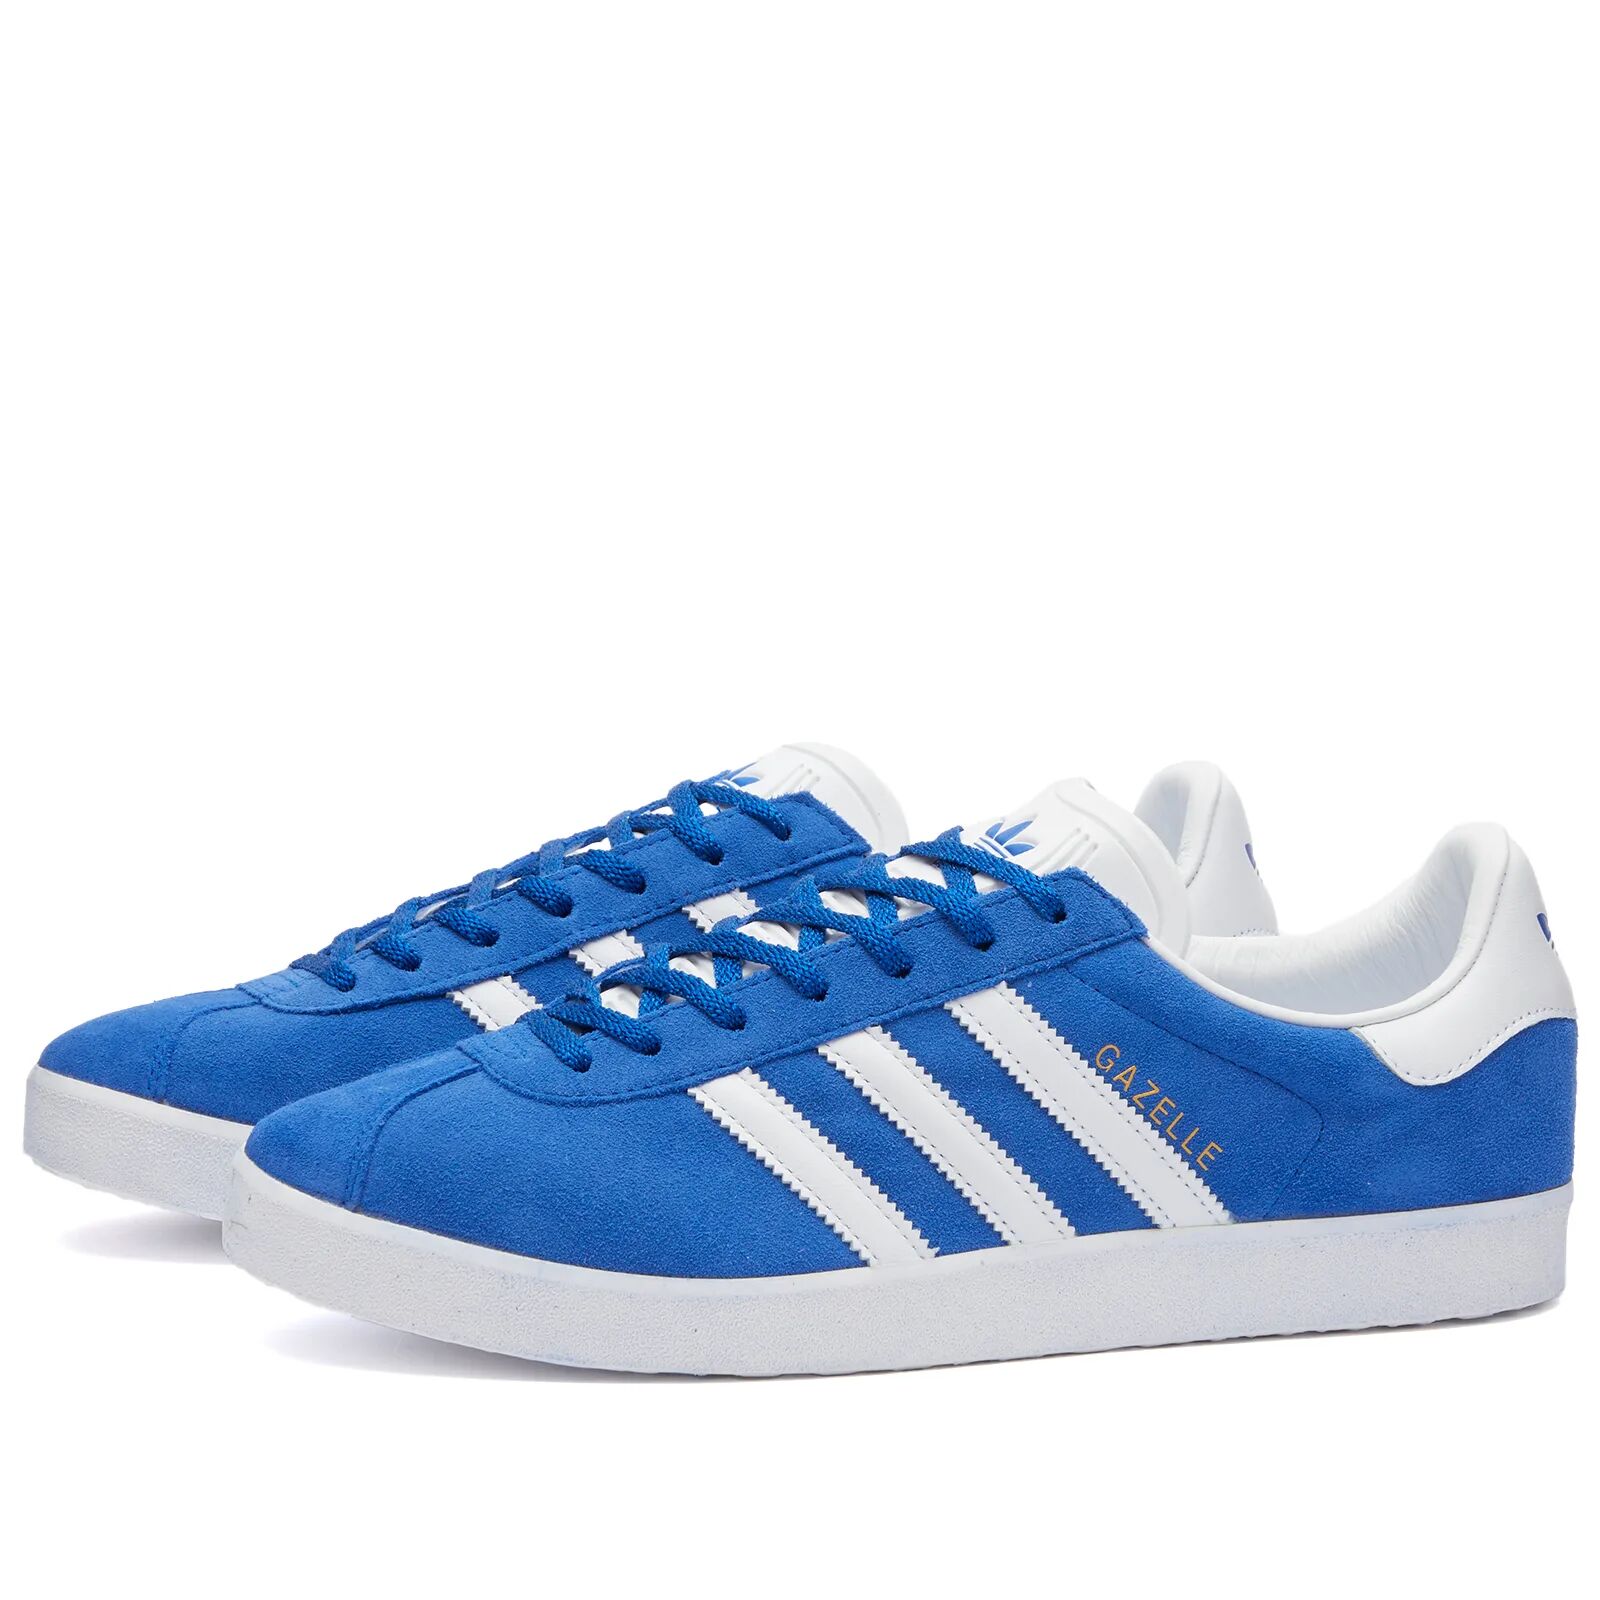 Adidas Men's Gazelle 85 Sneakers in Blue/White/Gold, Size UK 7.5